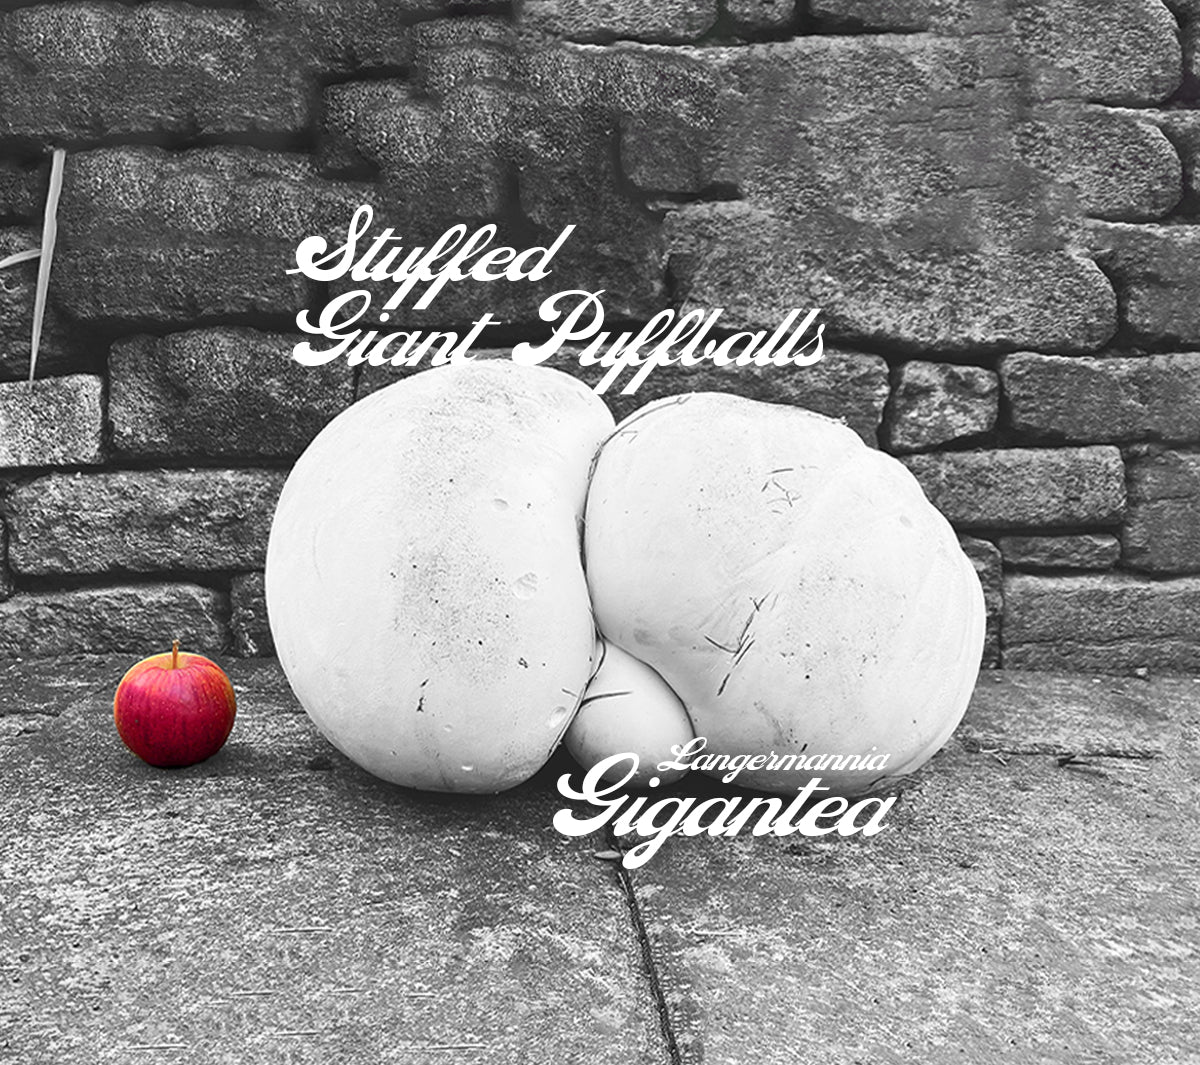 Stuffed Giant Puffballs - Langermannia Gigantea